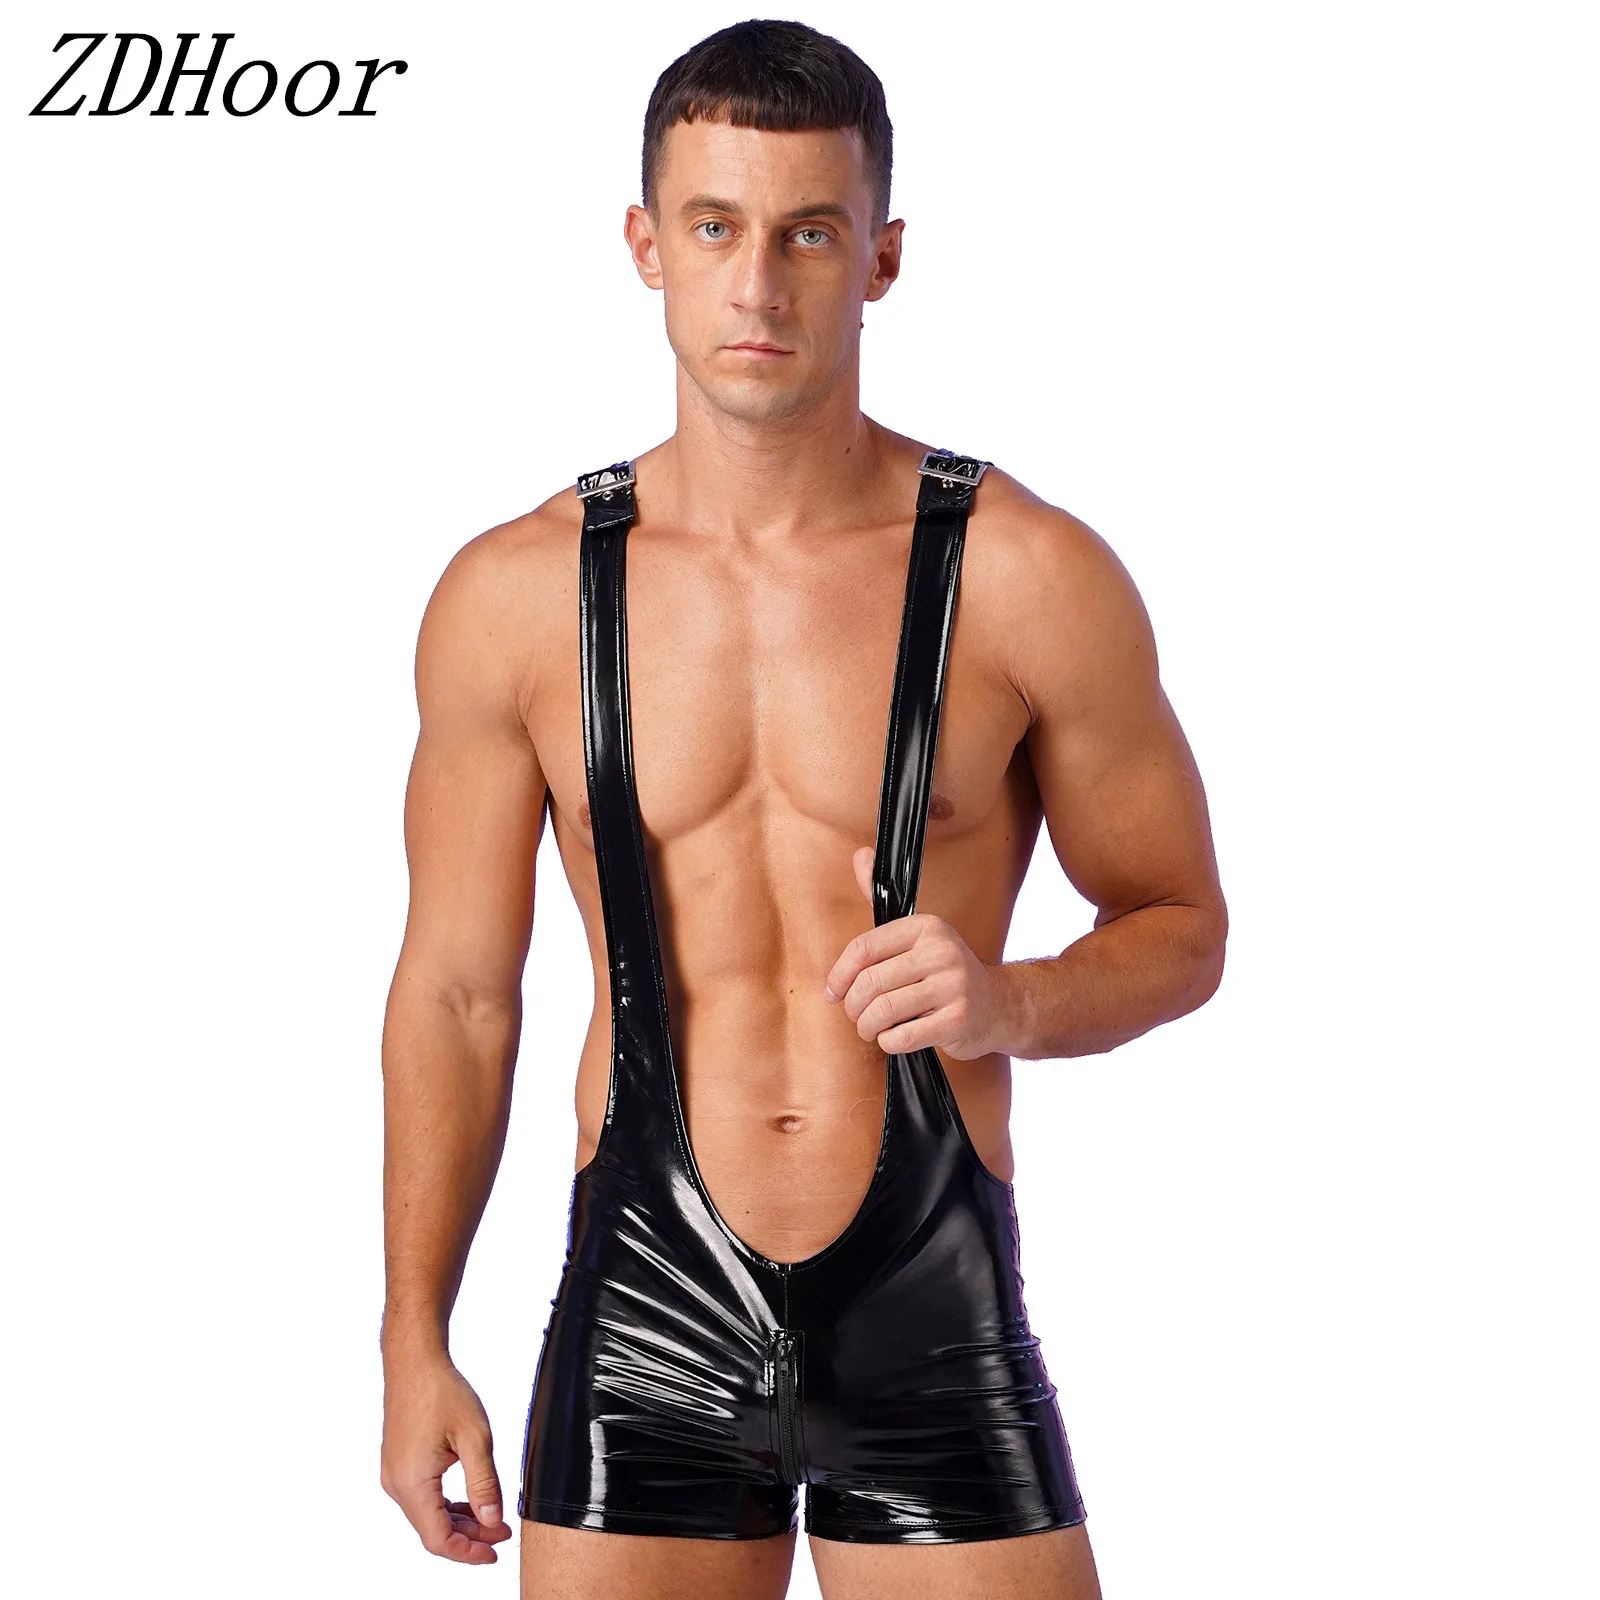 

Mens Glossy Patent Leather Overalls Bodysuit Adjustable Buckle Straps Zipper Crotch Suspenders Shorts Sailor Captain Lingerie